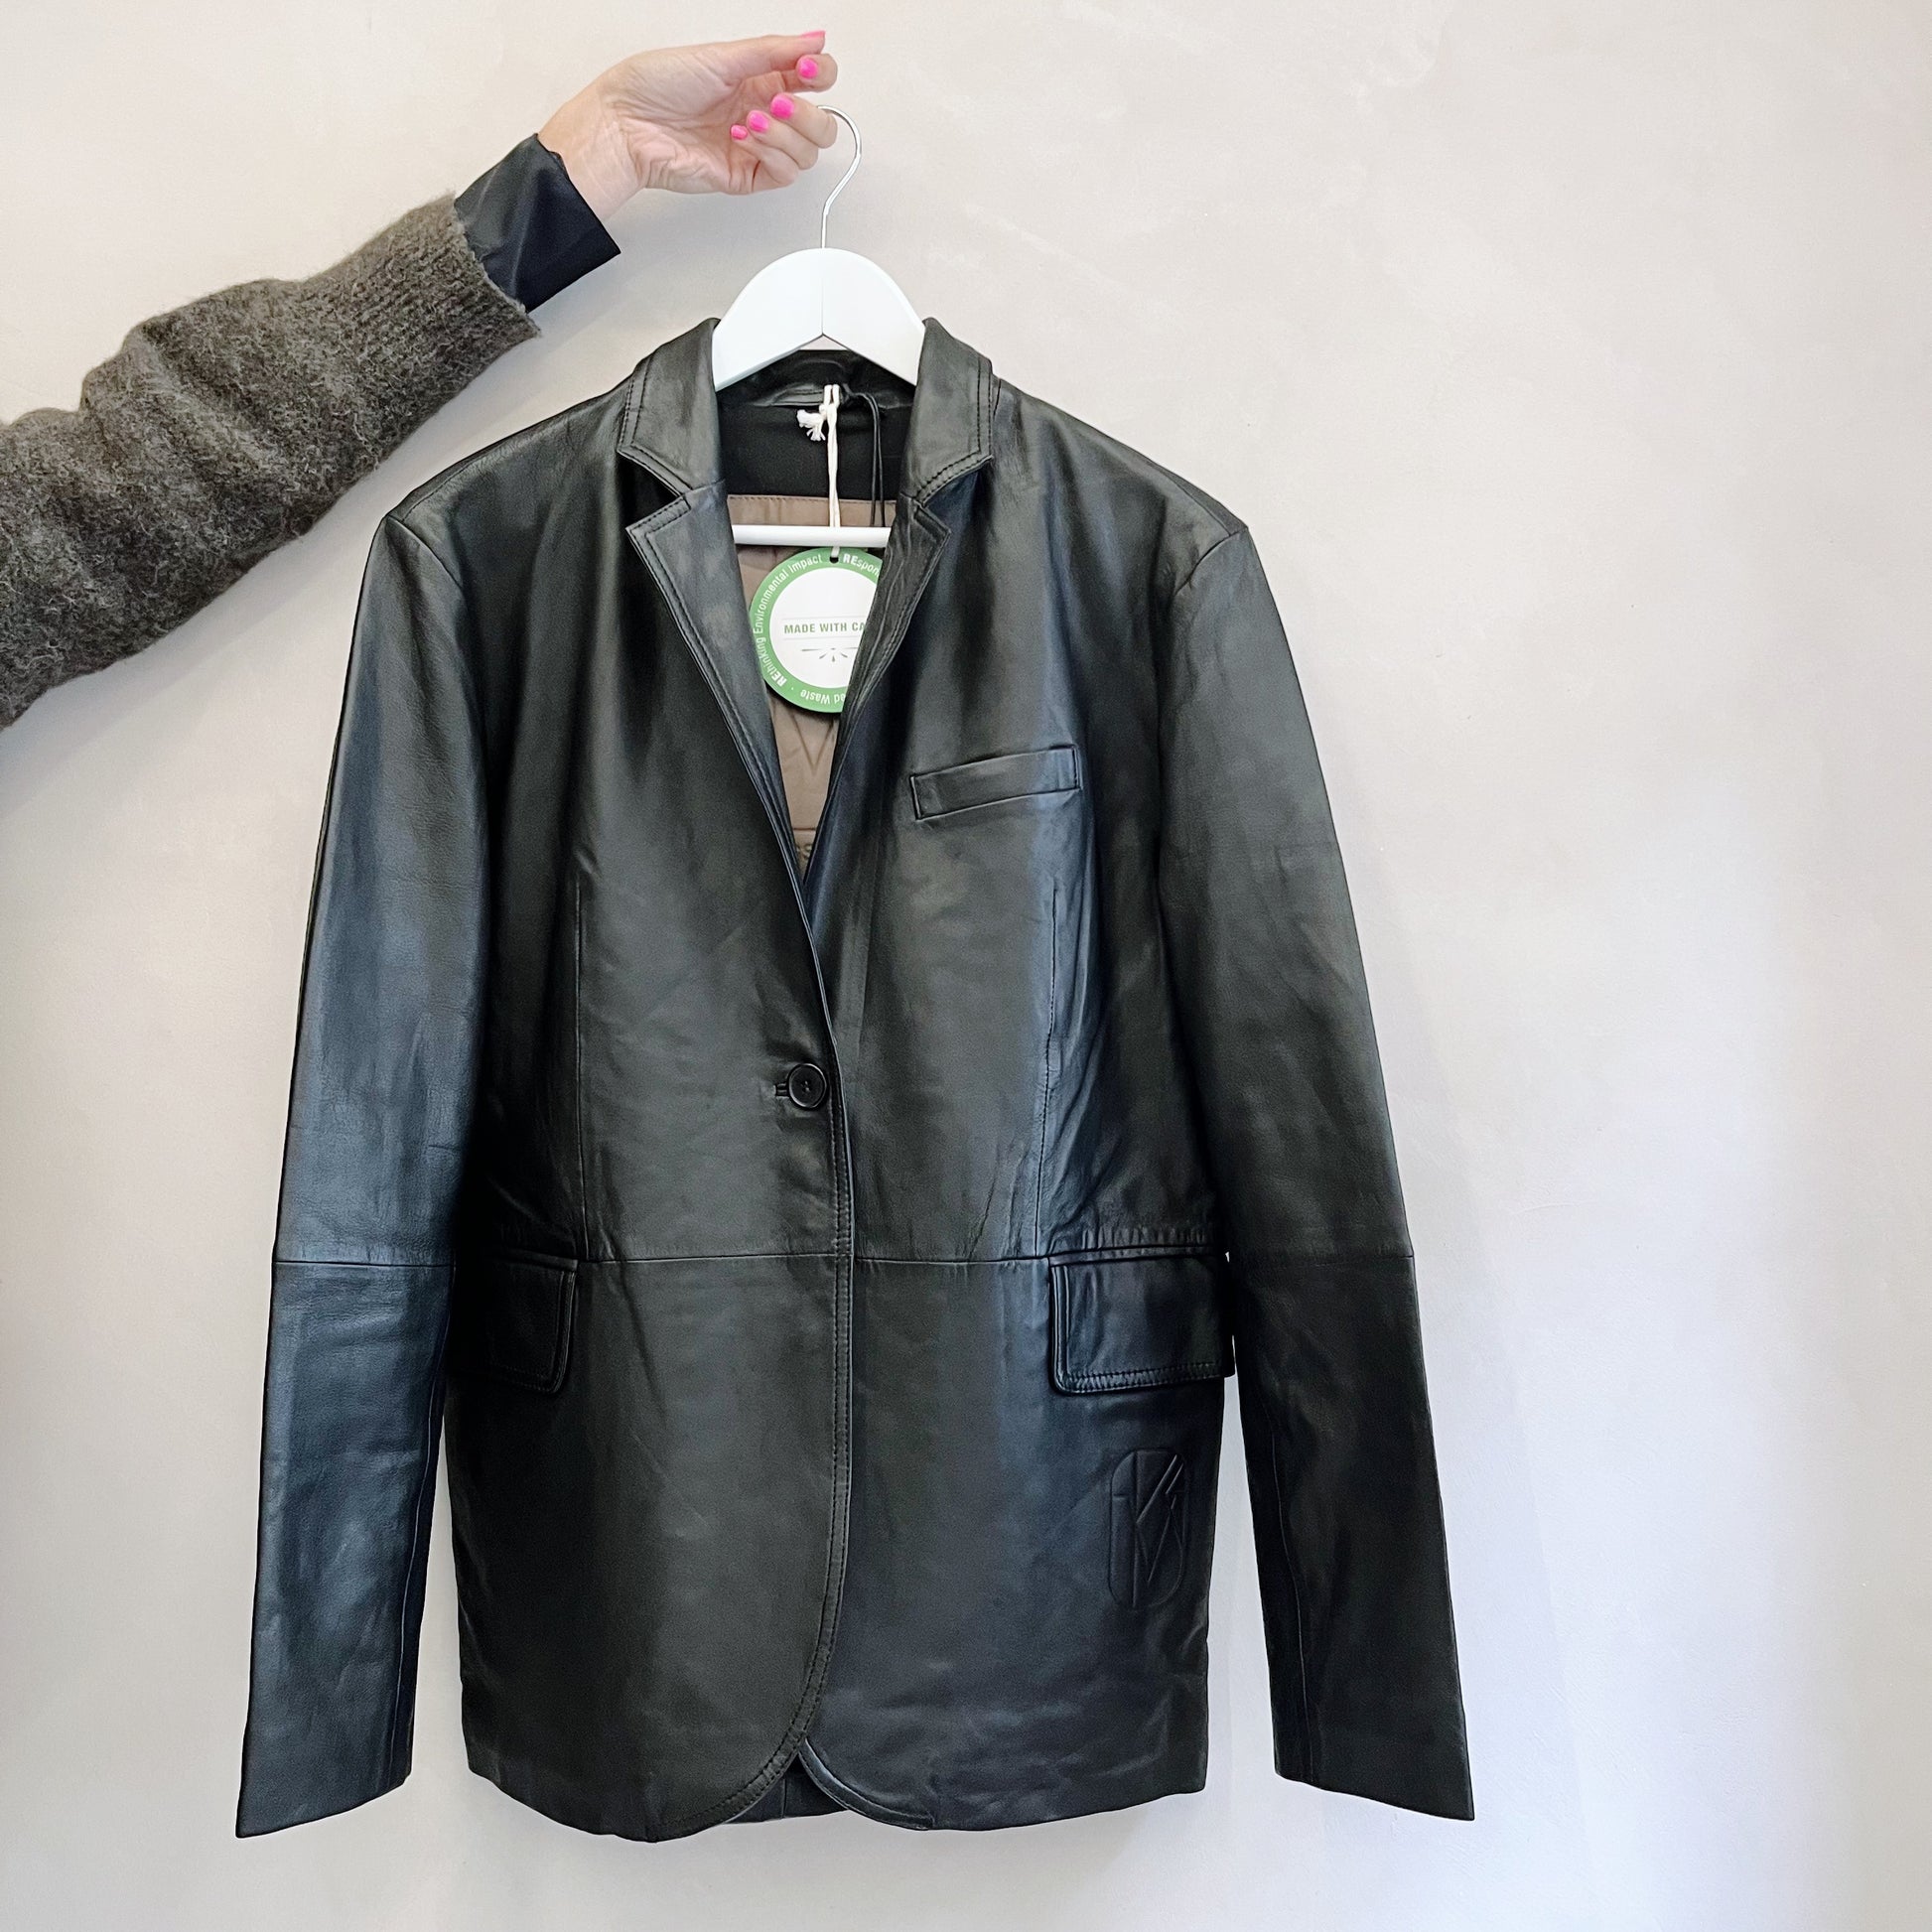 A MDK Celaya Classic Blazer - Black lambskin leather jacket hanging on a hanger.